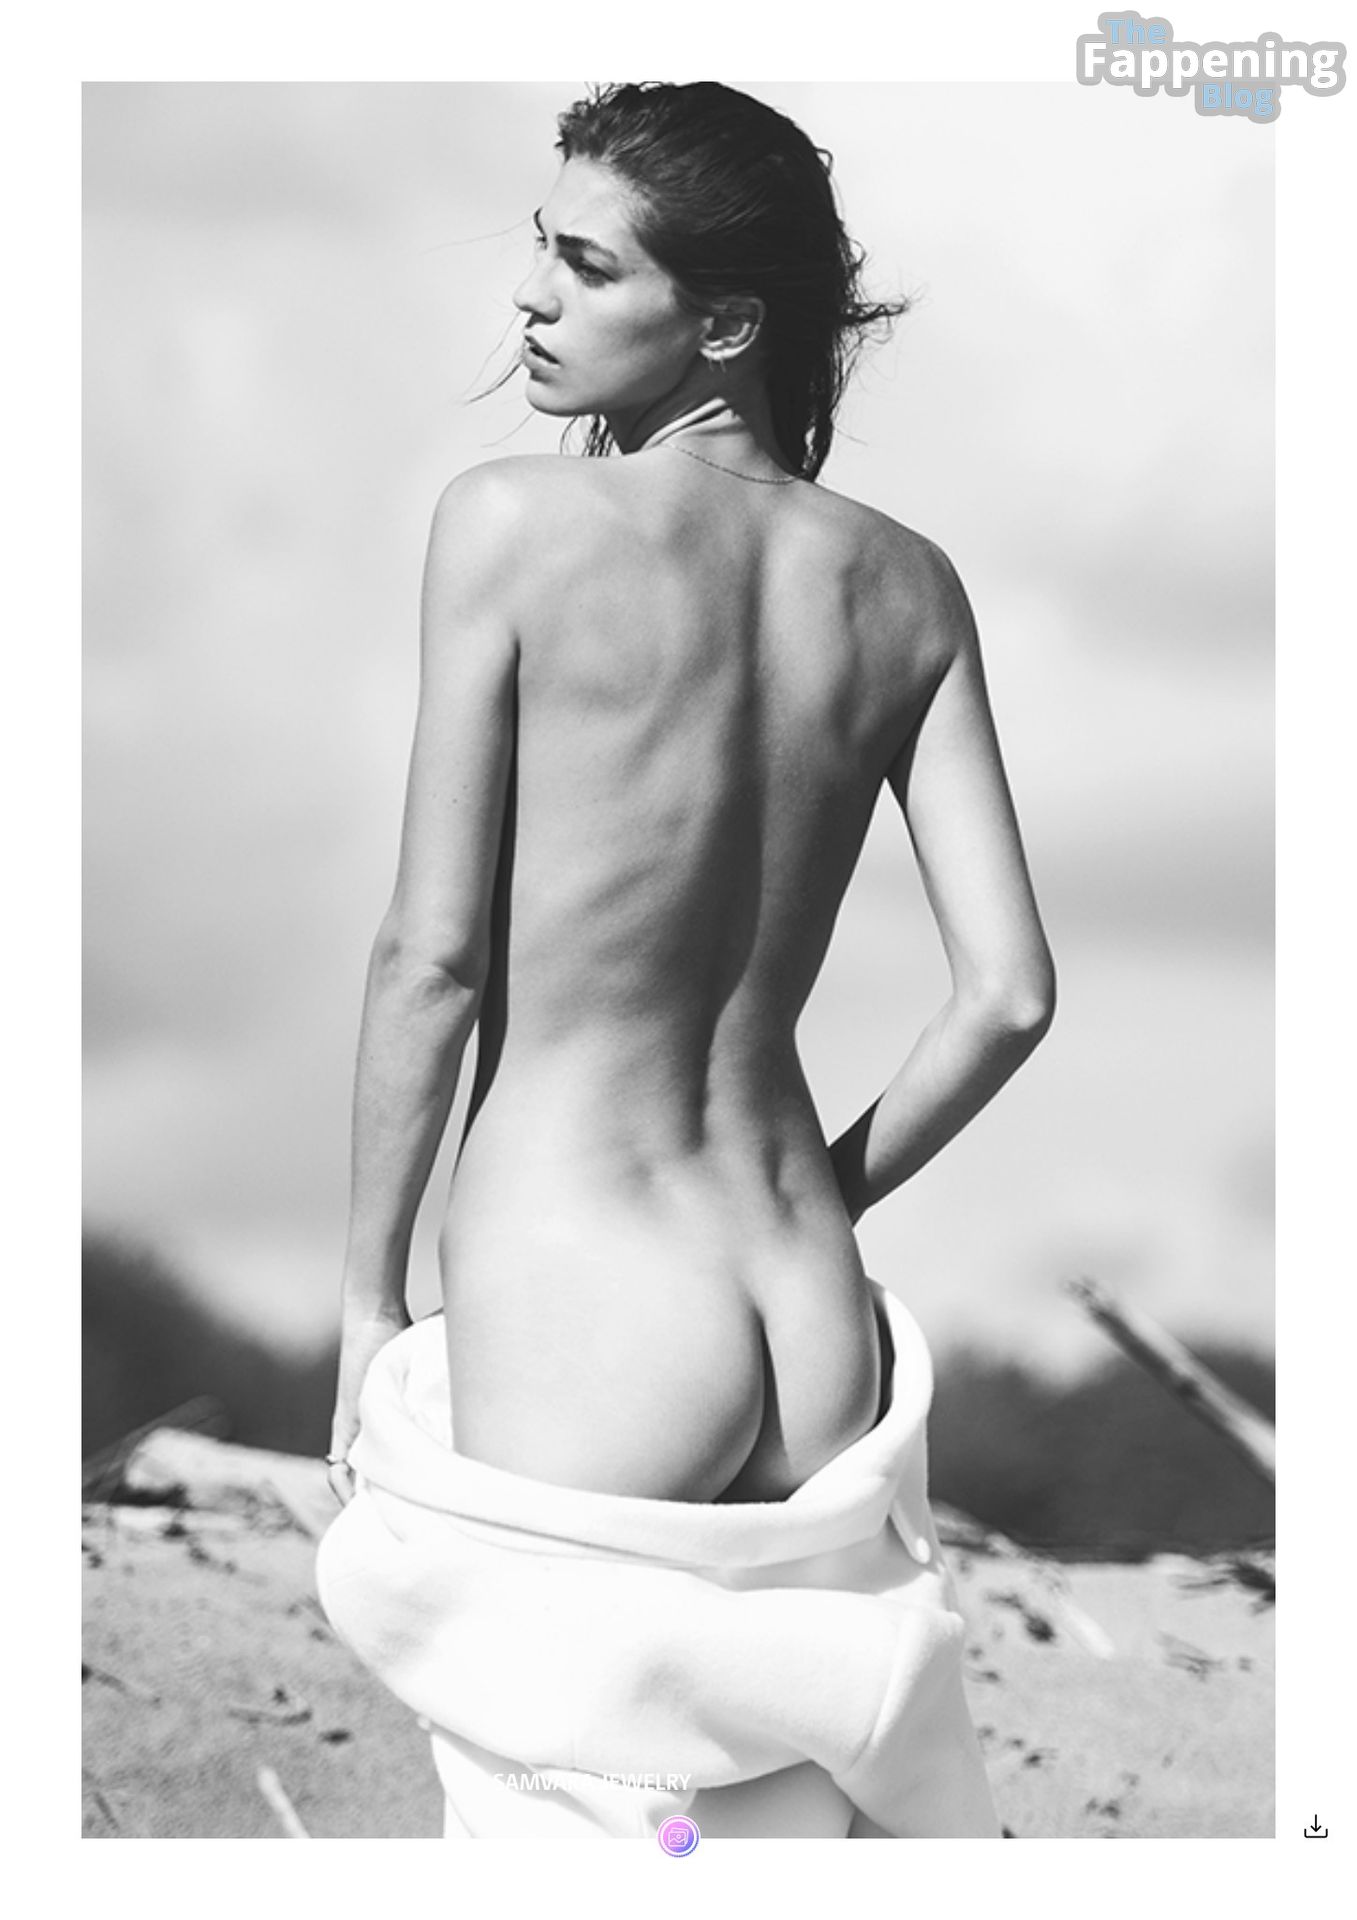 Samantha-Gradoville-Nude-17-The-Fappening-Blog.jpg